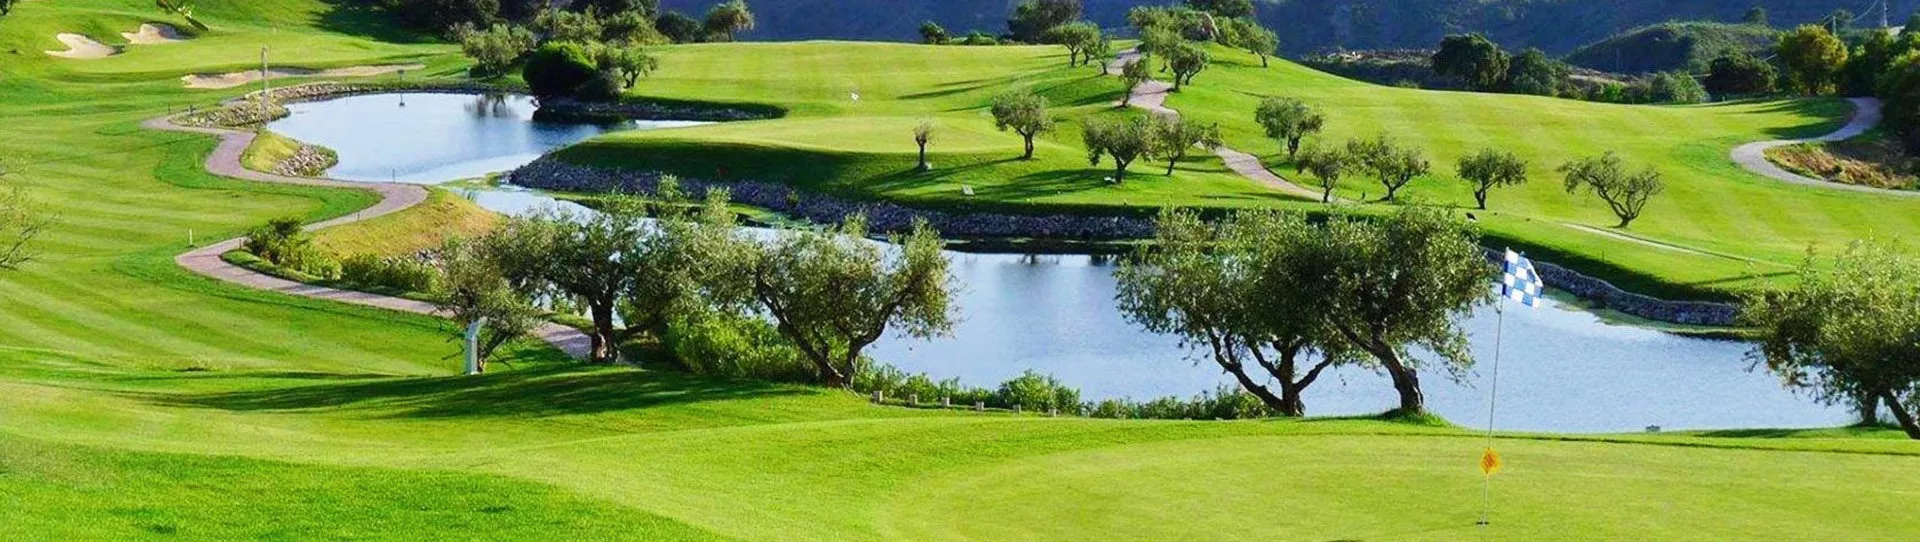 Spain golf courses - Alhaurin Golf Resort - Photo 2